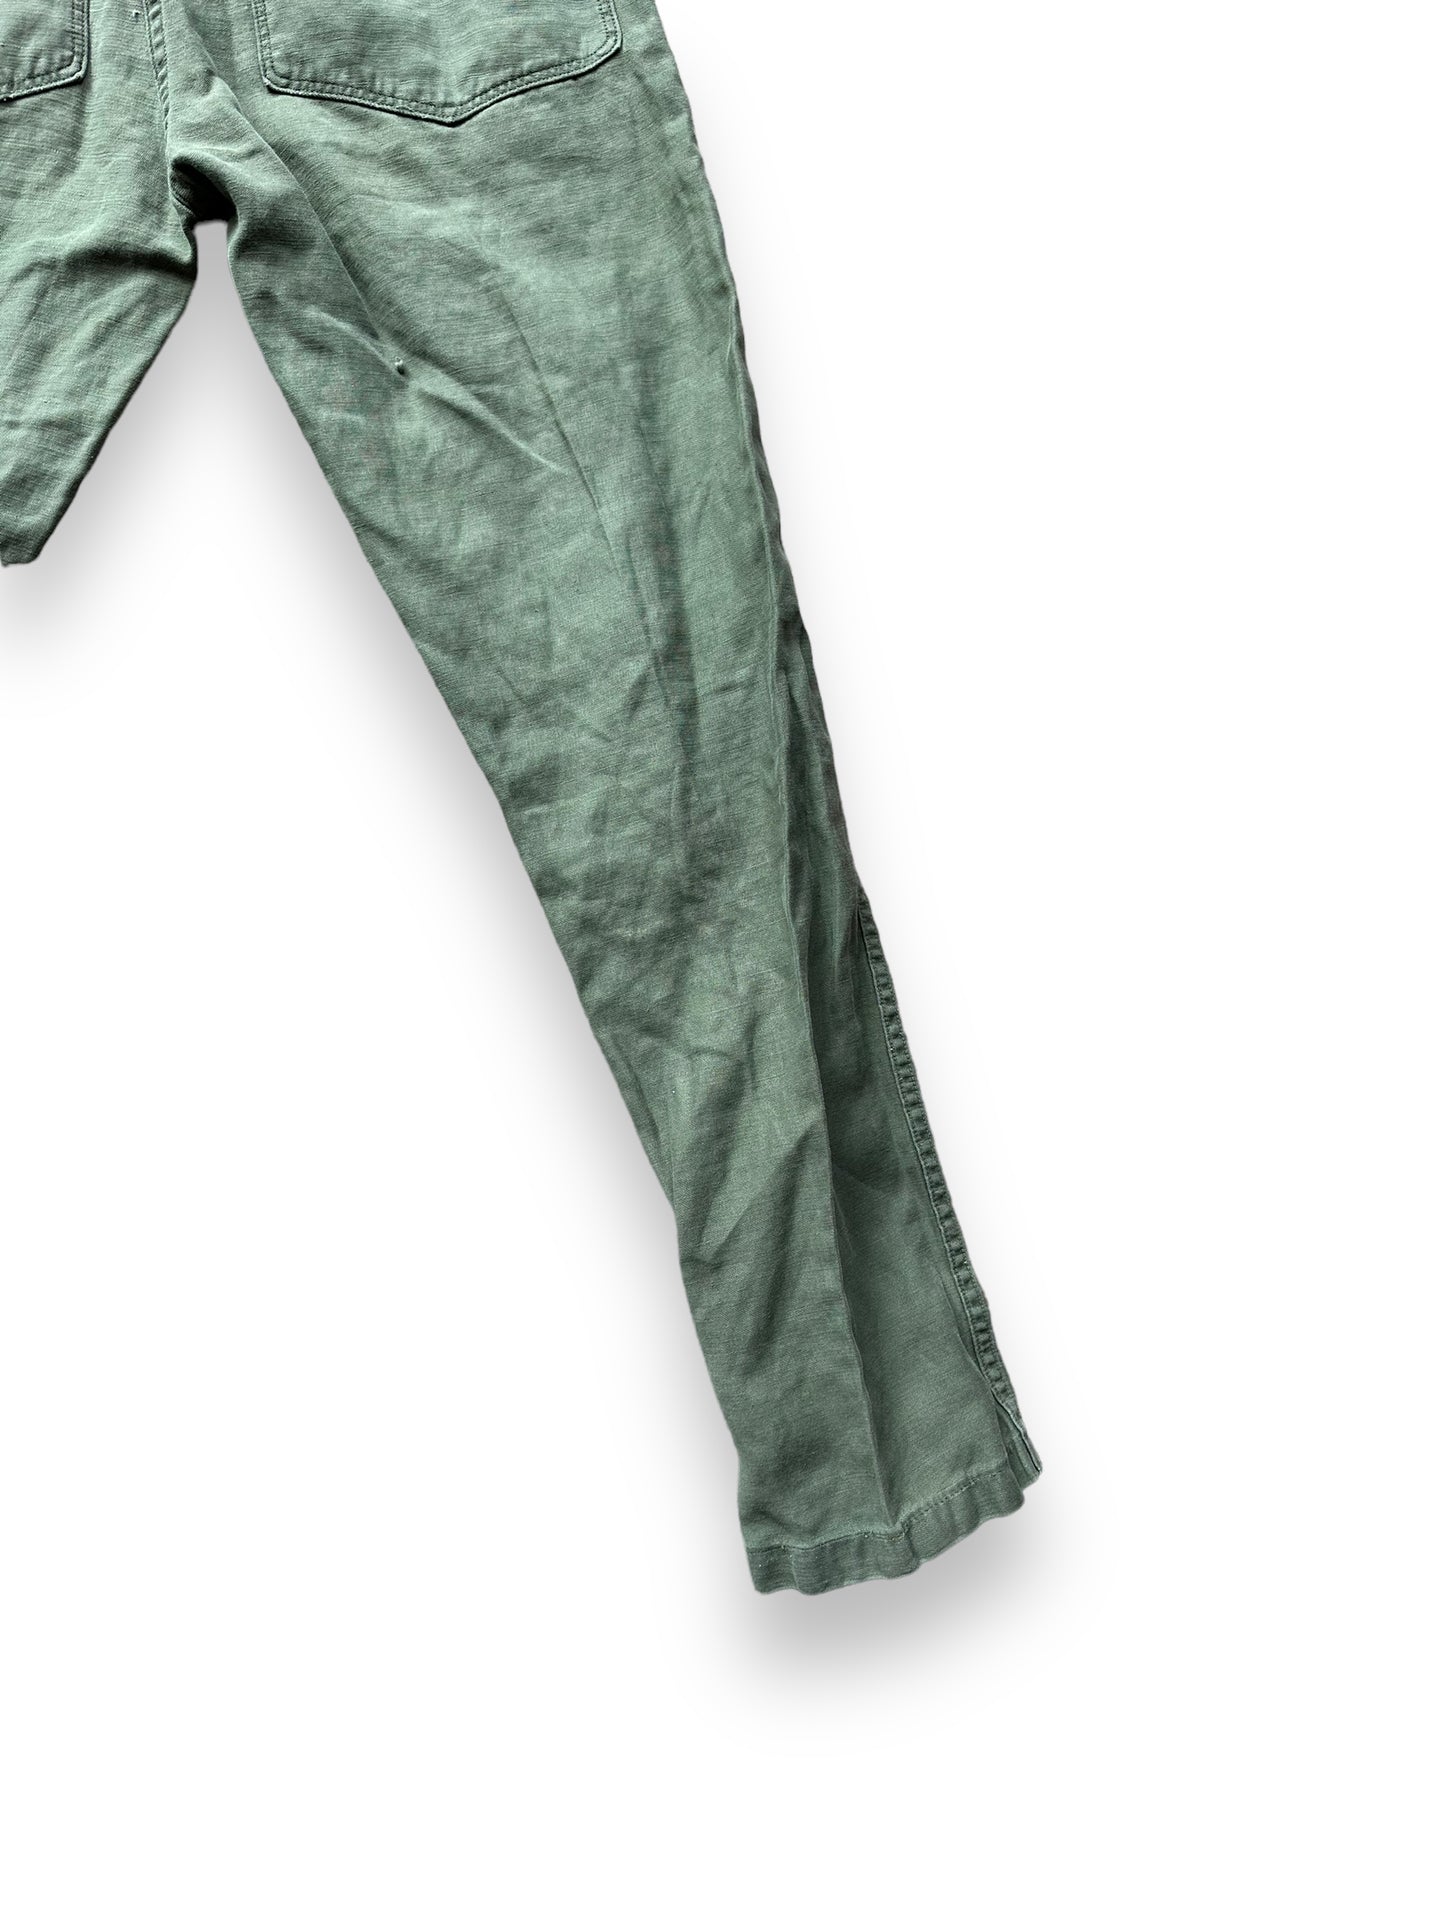 Right Rear Leg View of Vintage Sateen OG-107's W30 L32.5 | Vintage Viet Nam Era Baker Pants Seattle | Barn Owl Vintage Workwear